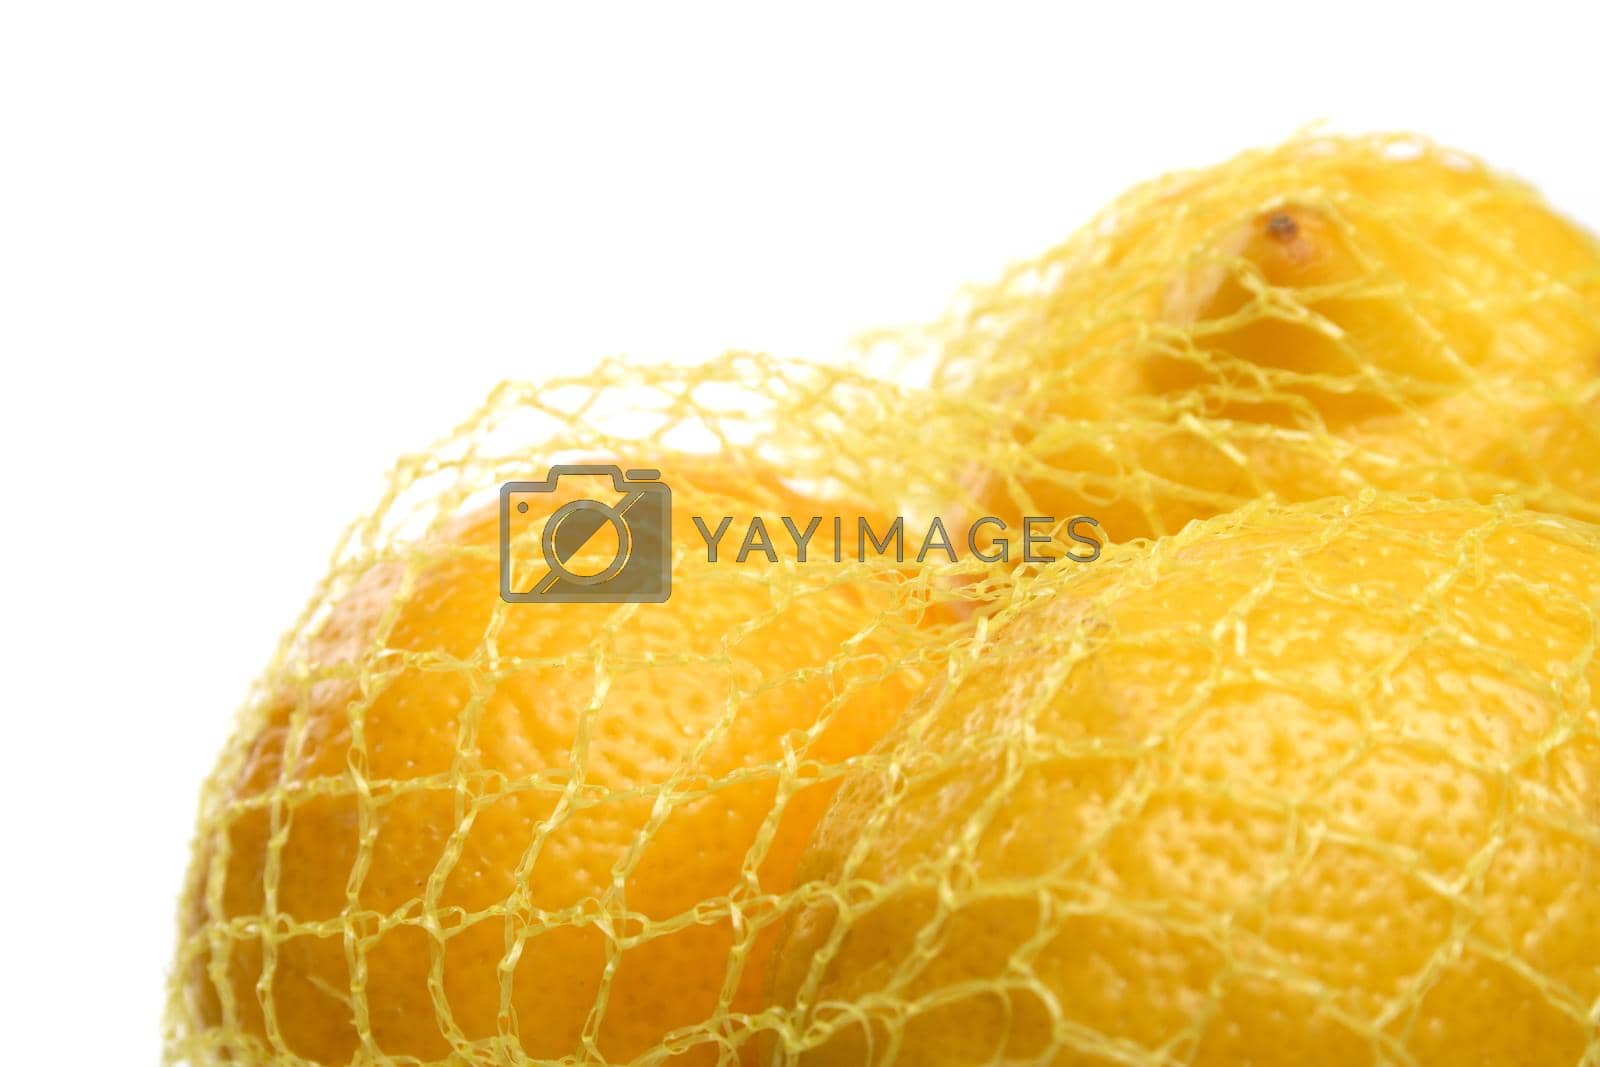 Royalty free image of Lemons by moodboard